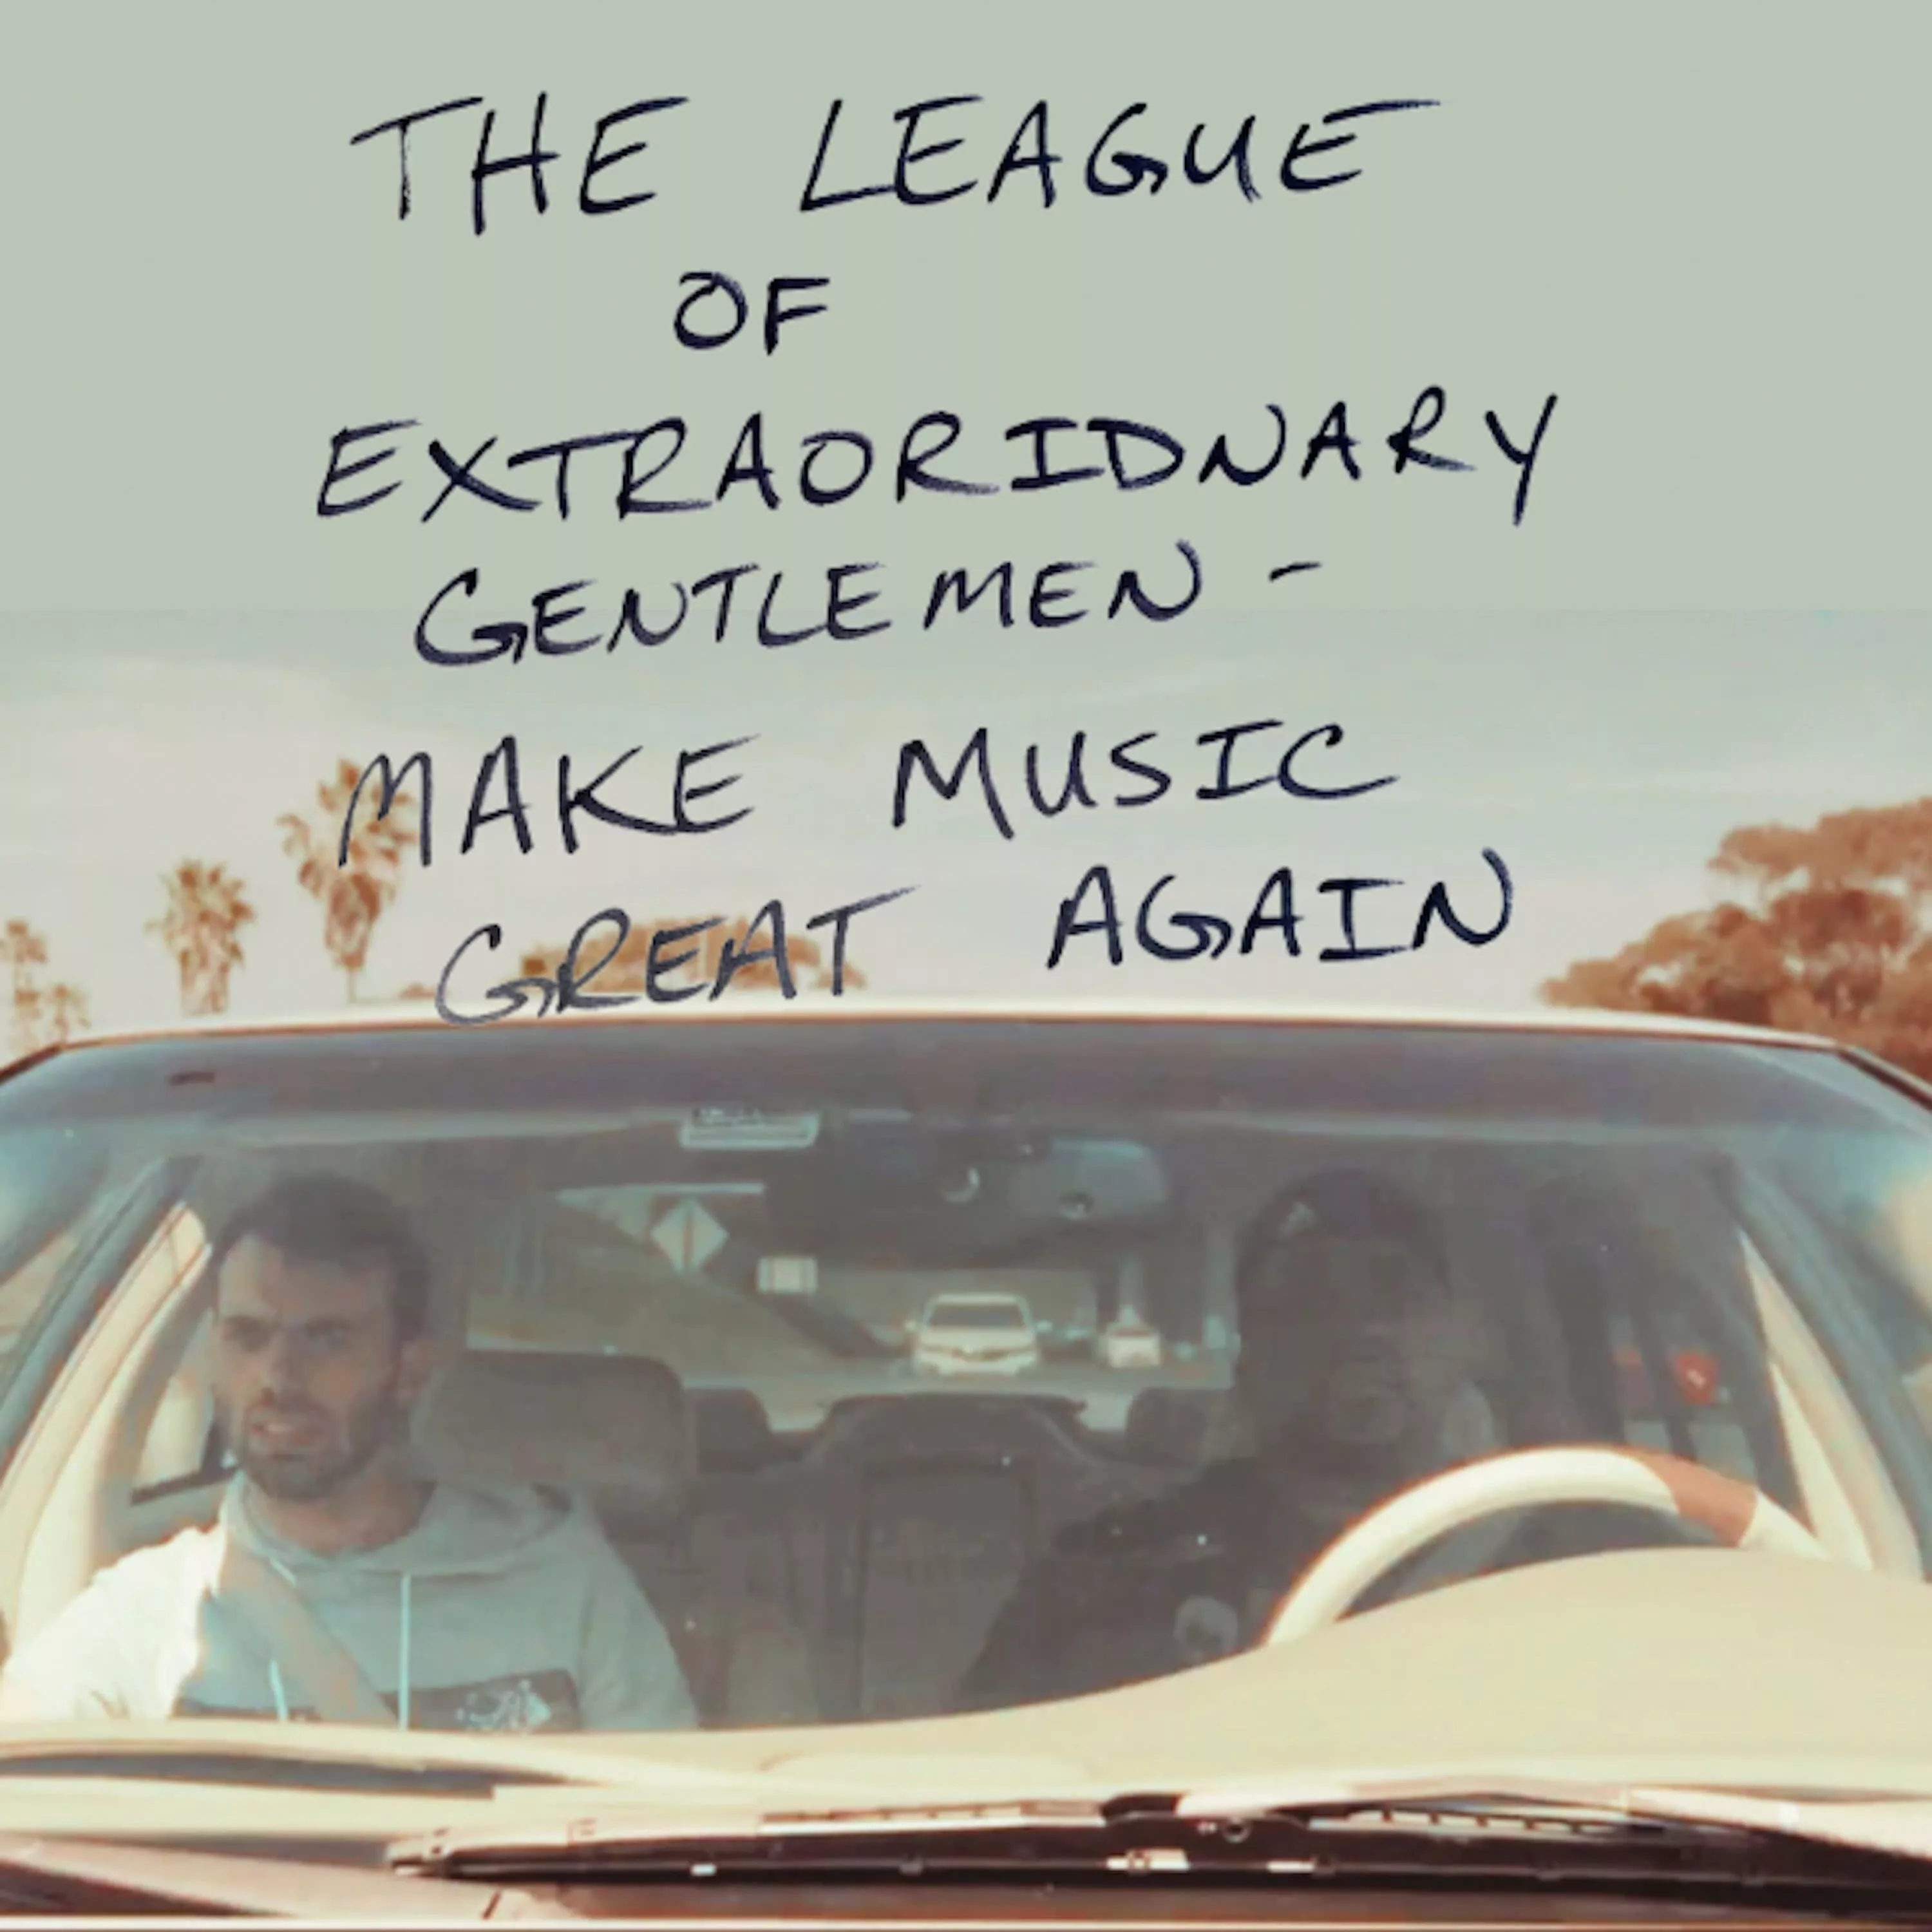 Make Music Great Again - The League of Extraordinary Gentlemen